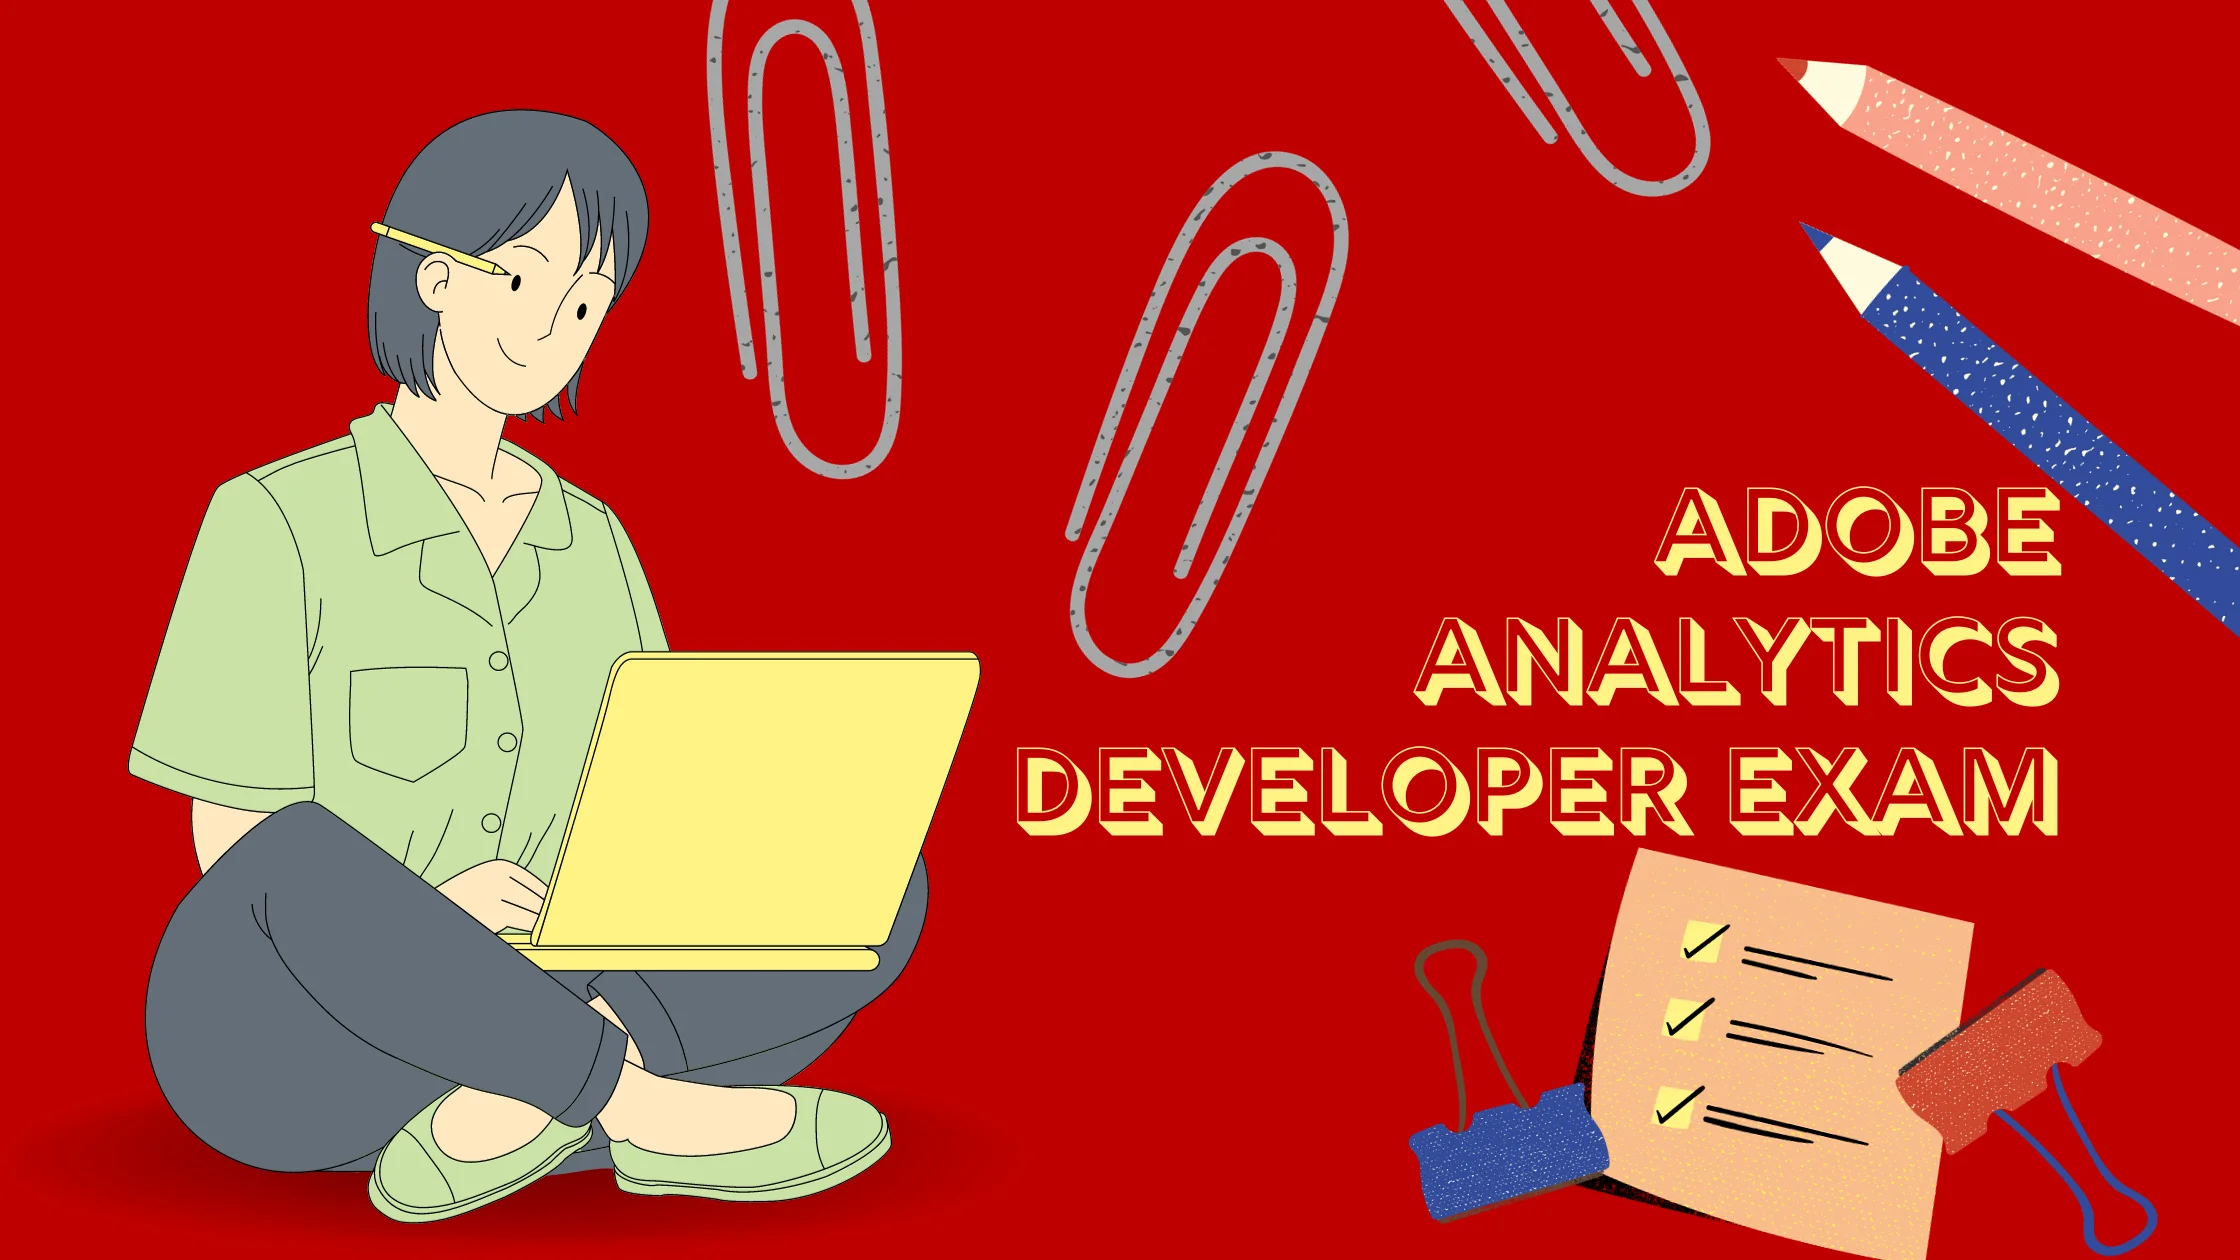 Adobe Analytics Developer Exam success